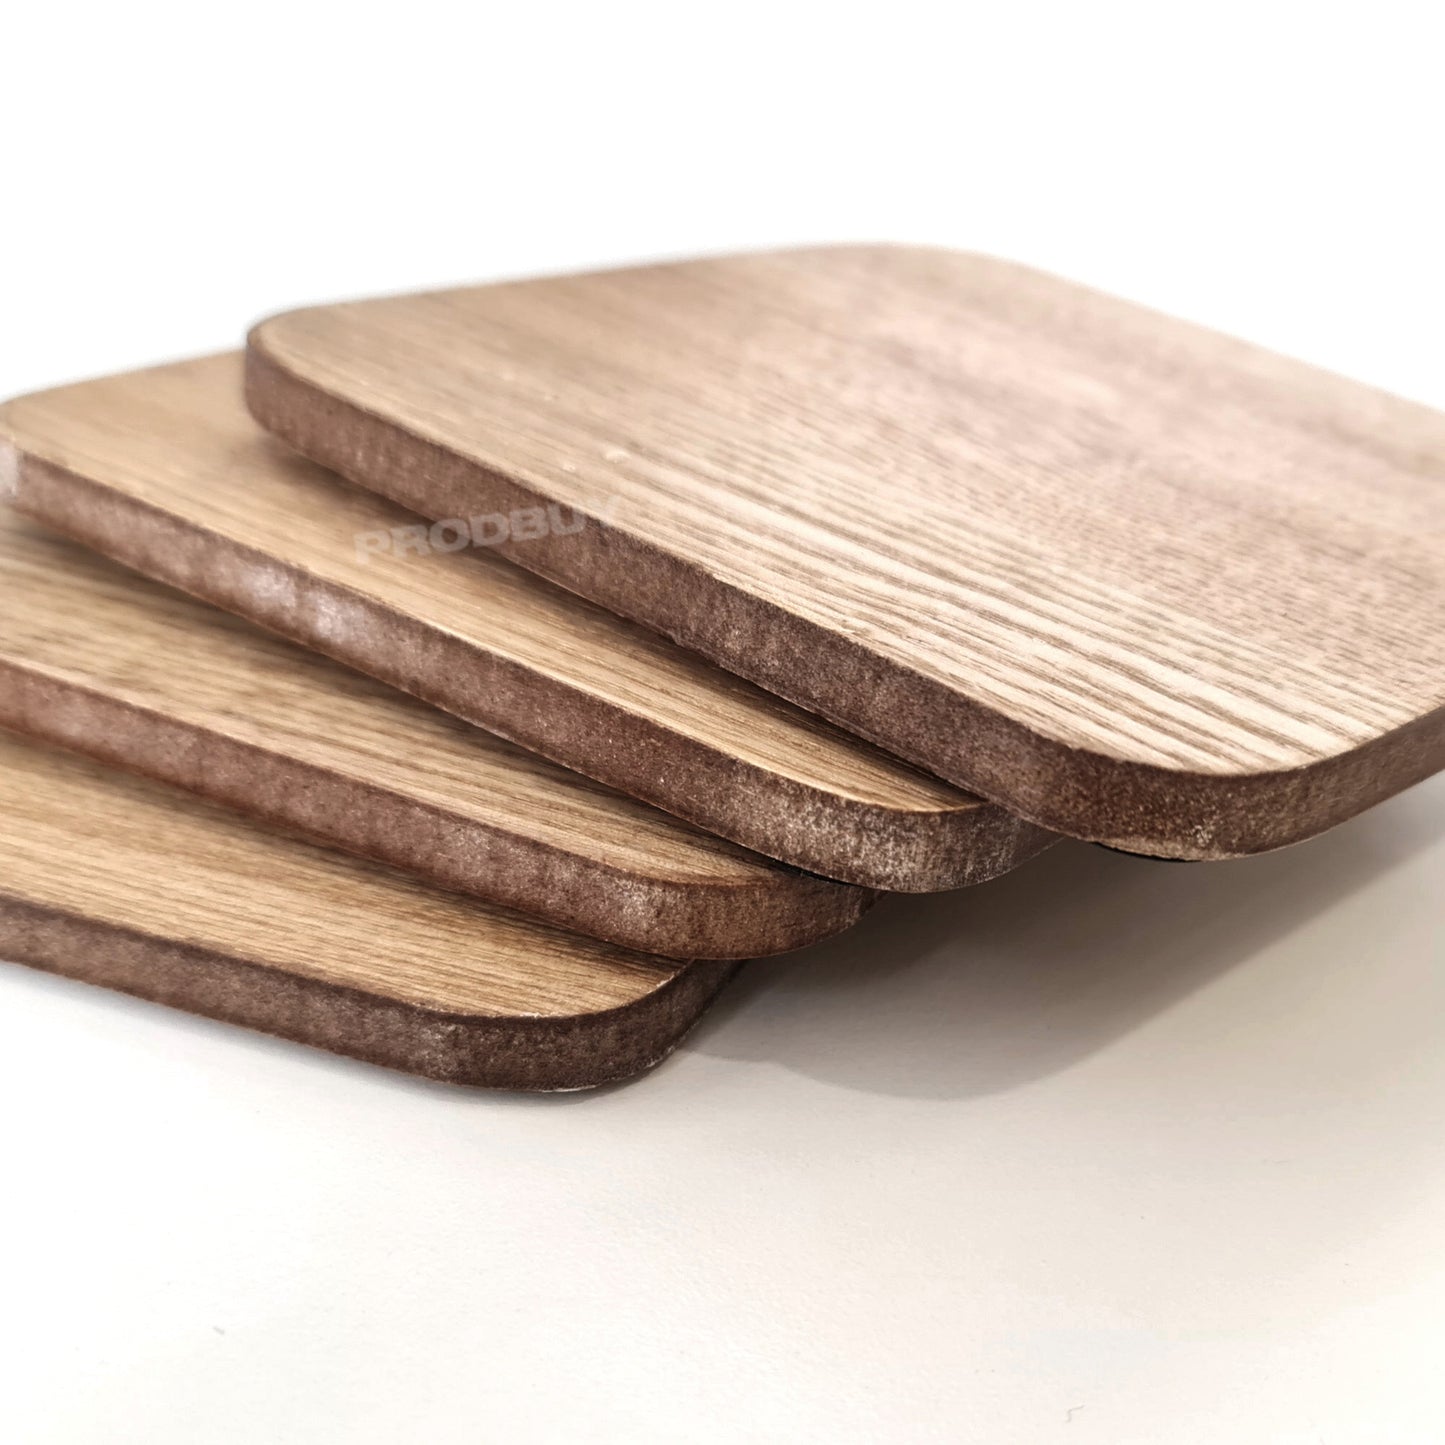 Set of 4 Placemats & 4 Coasters with Brown Wooden Oak Veneer